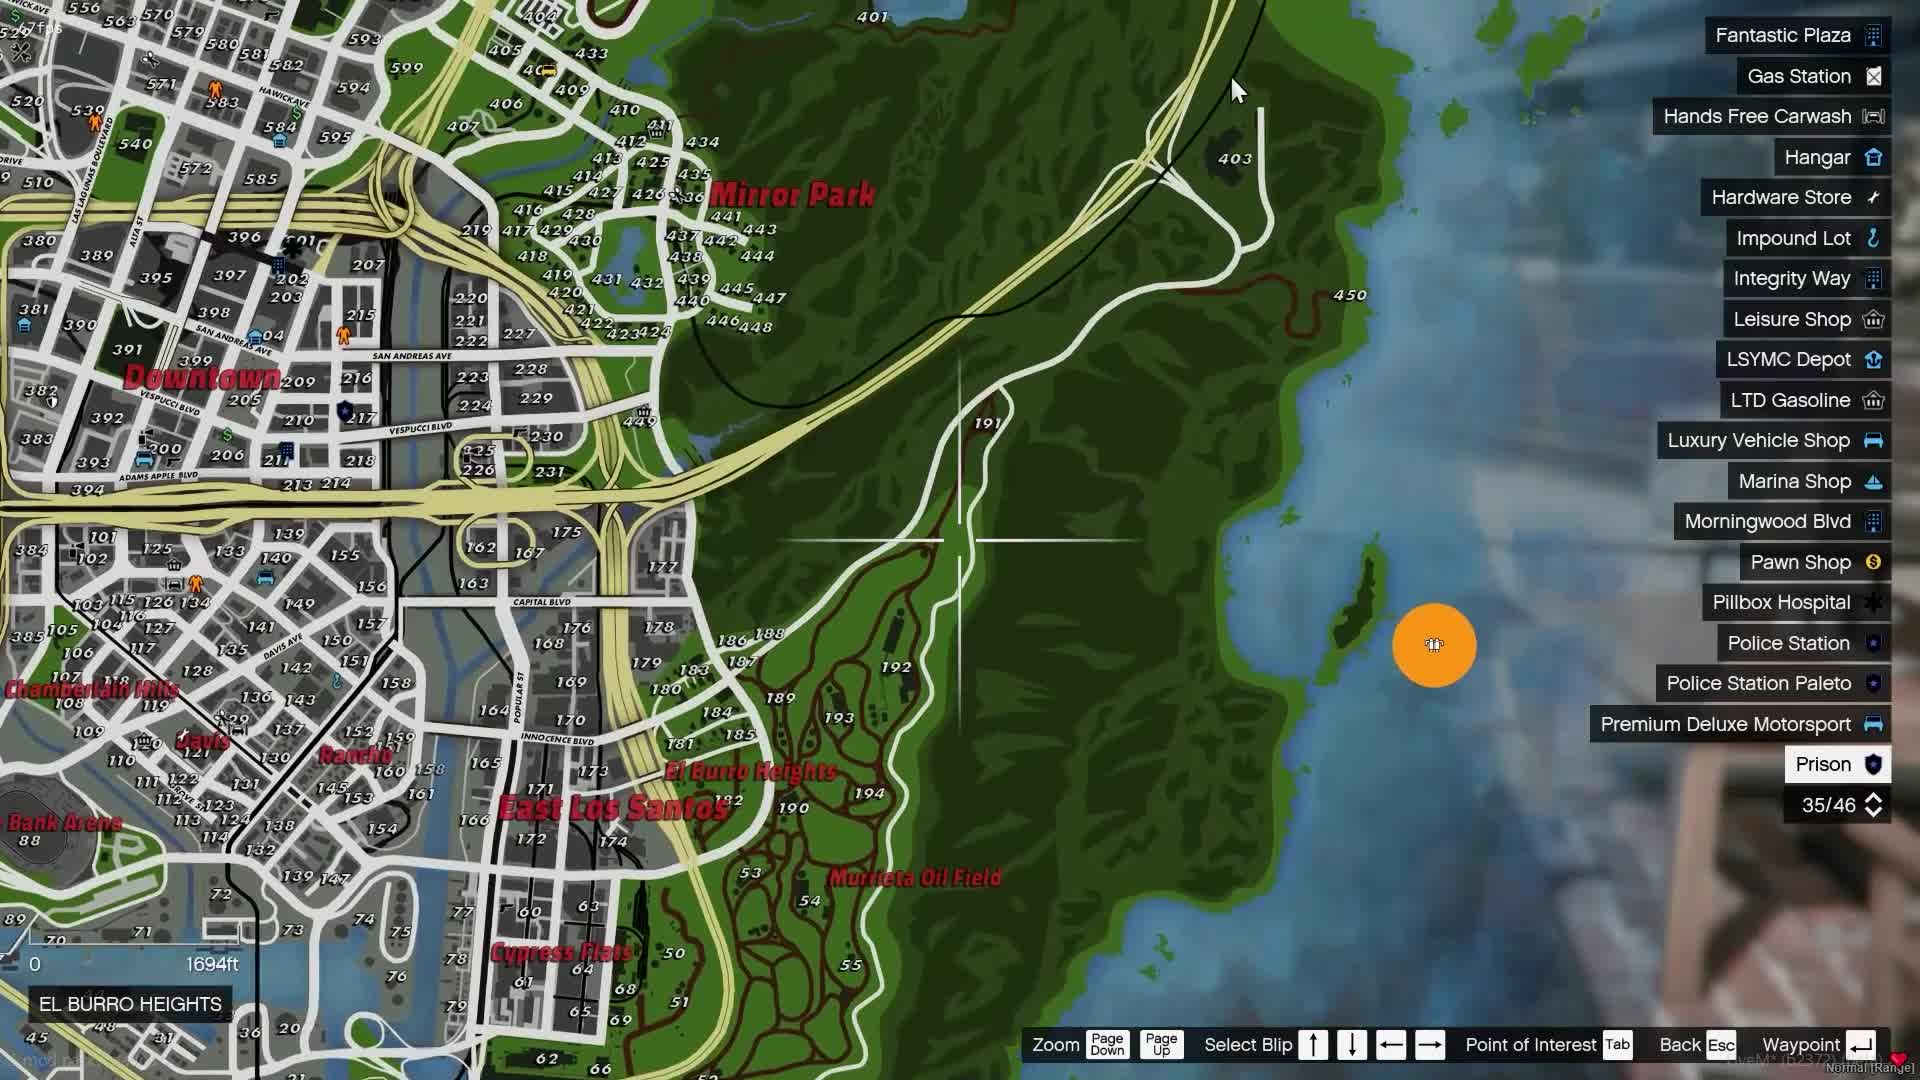 I got GTA V premium edition. There was a map of Los Santos. I